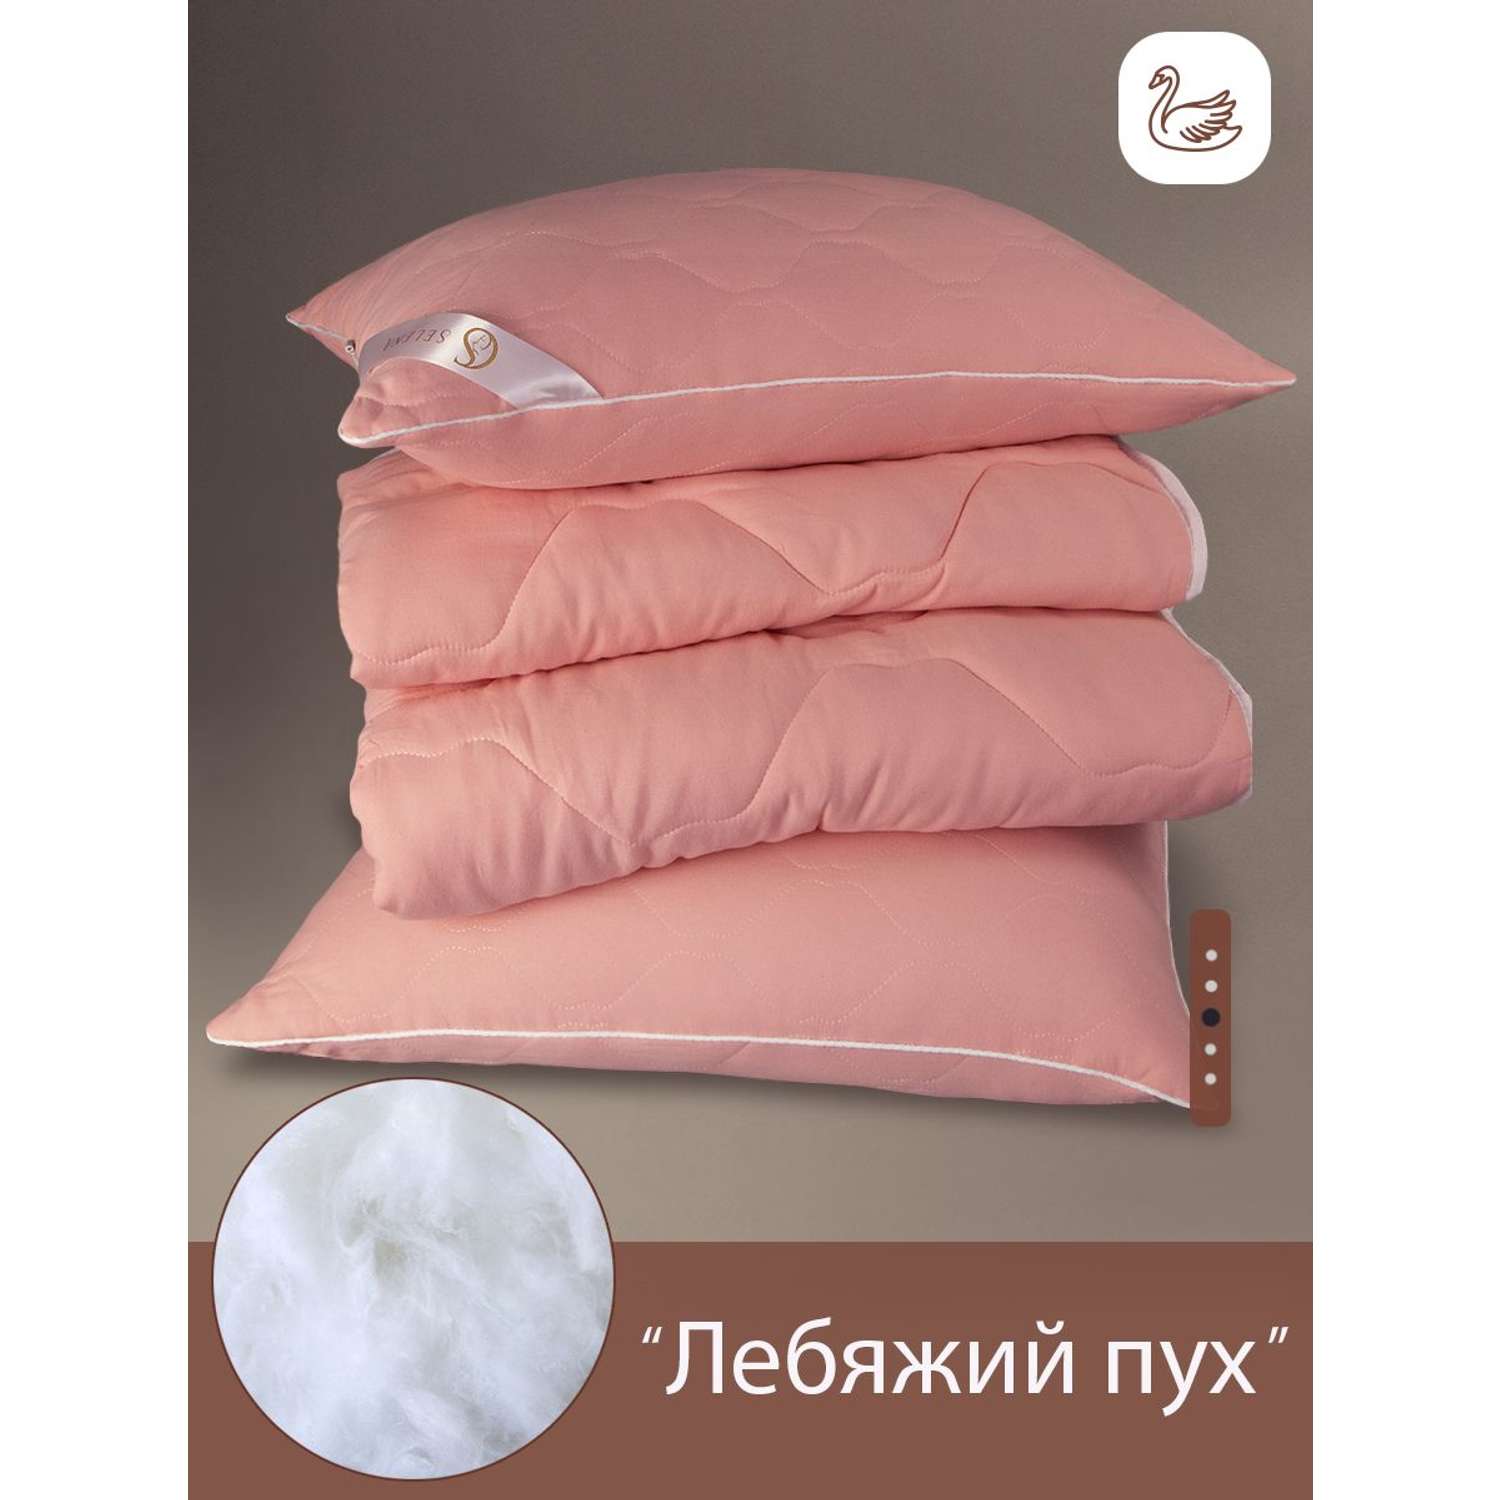 Одеяло SELENA Crinkle line 140х205 см розовое наполнитель Лебяжий пух - фото 4